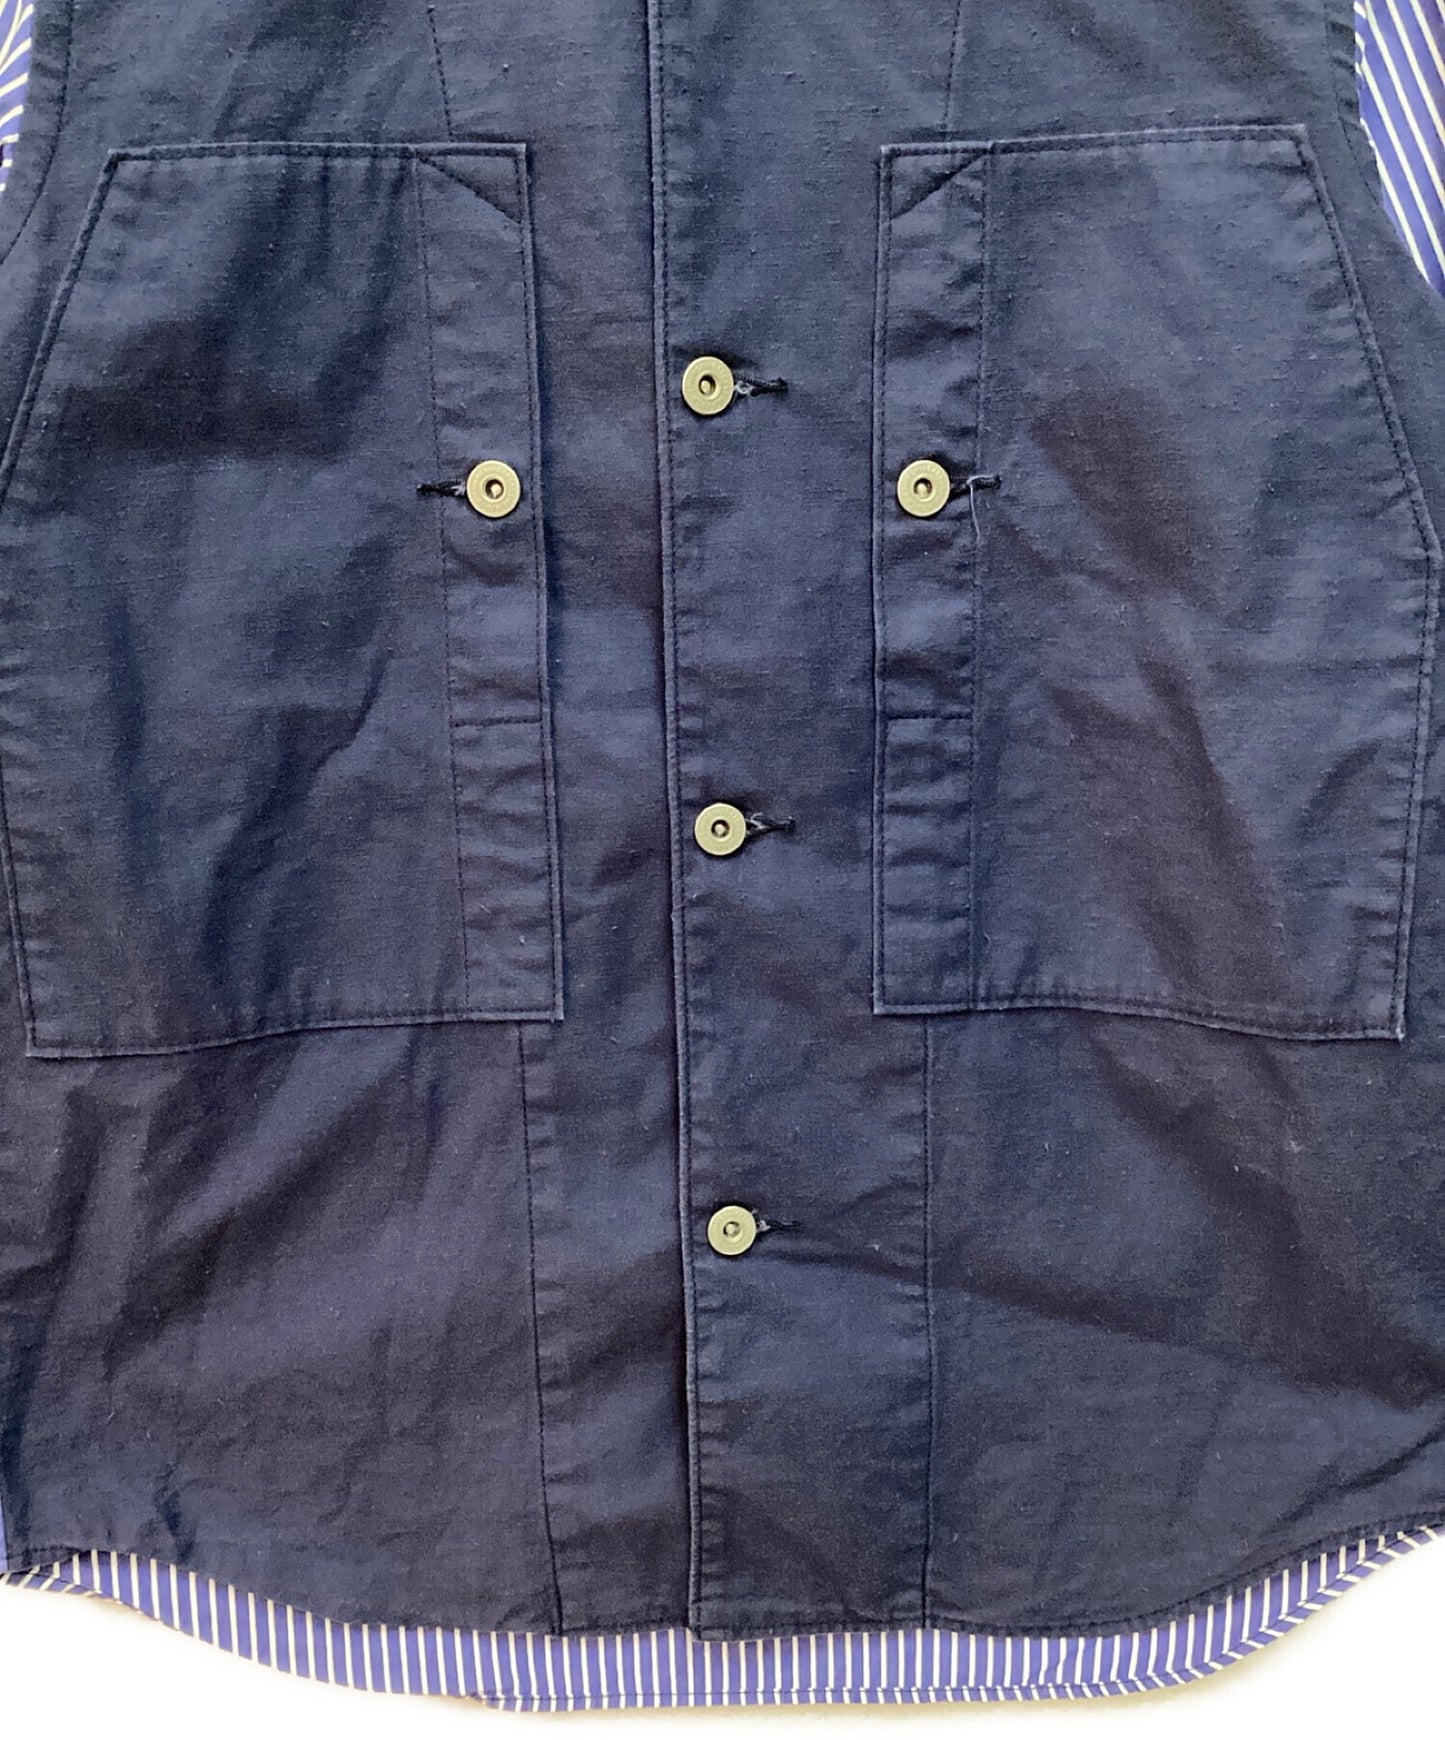 [Pre-owned] eYe COMME des GARCONS JUNYAWATANABE MAN Switched Stripe Shirt WG-B902